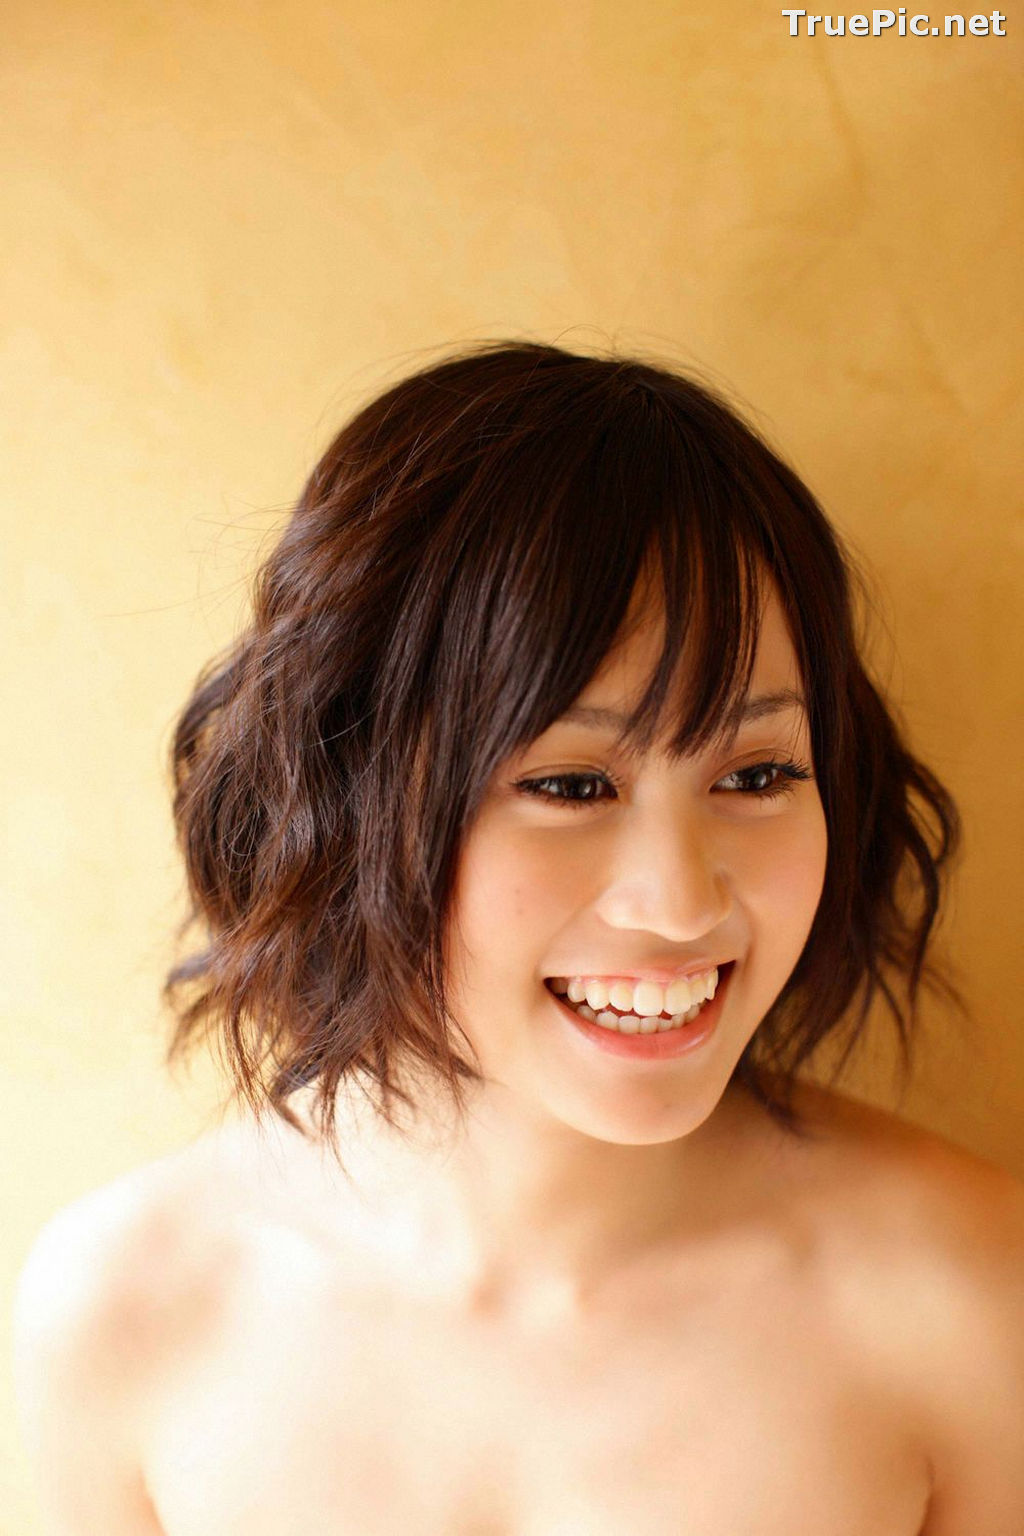 Image [YS Web] Vol.330 - Japanese Actress and Singer - Maeda Atsuko - TruePic.net - Picture-33